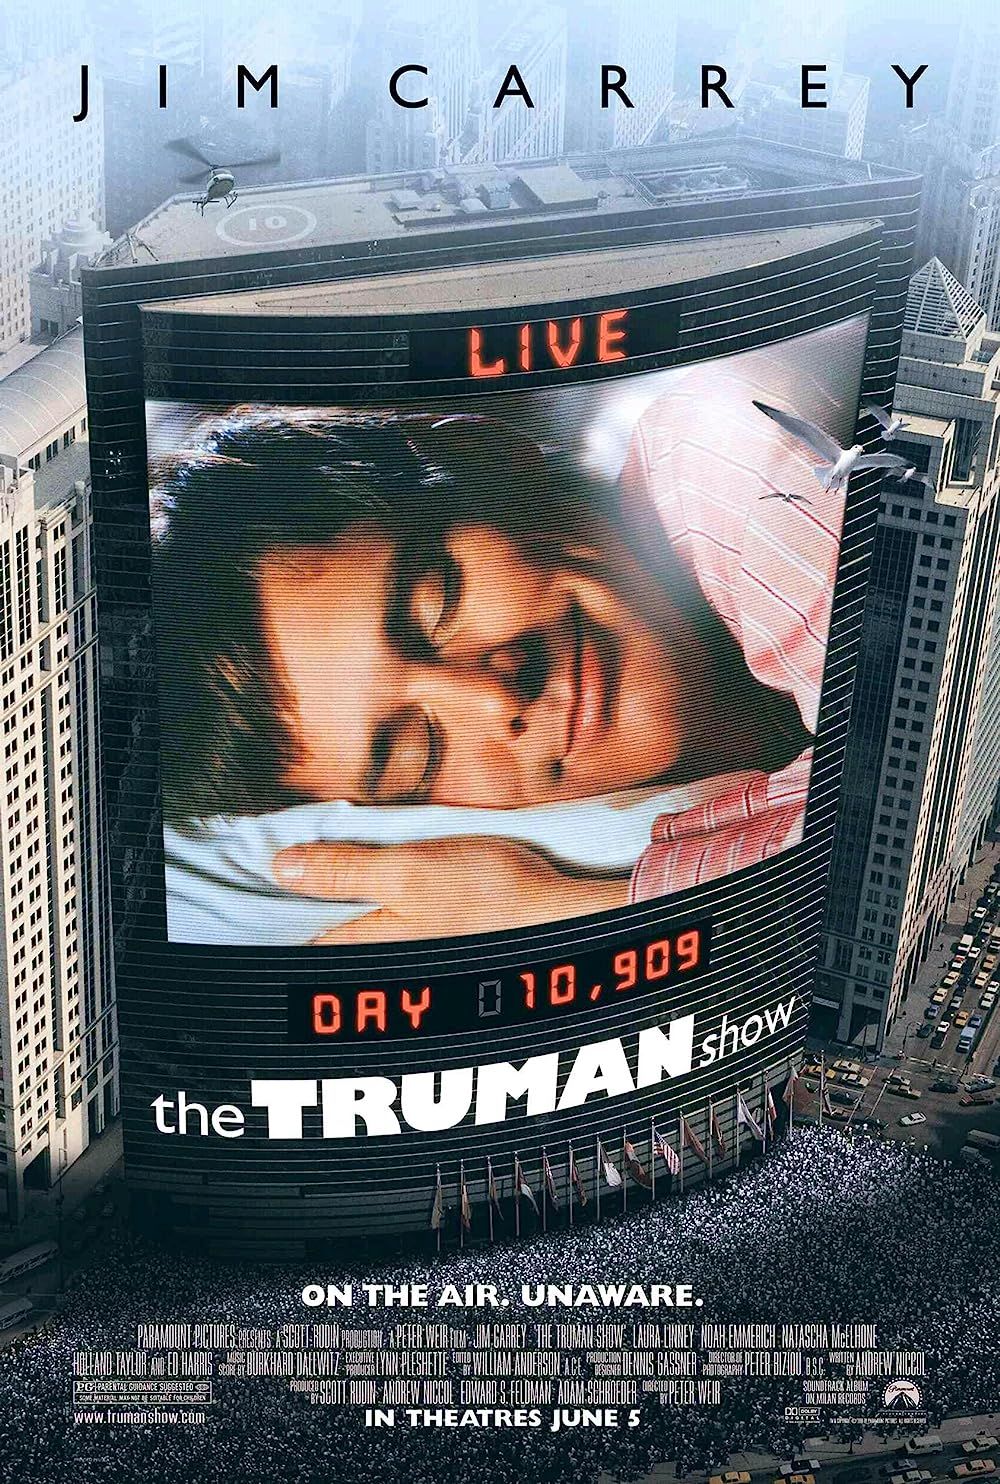 Jim Carrey on The Truman Show Poster